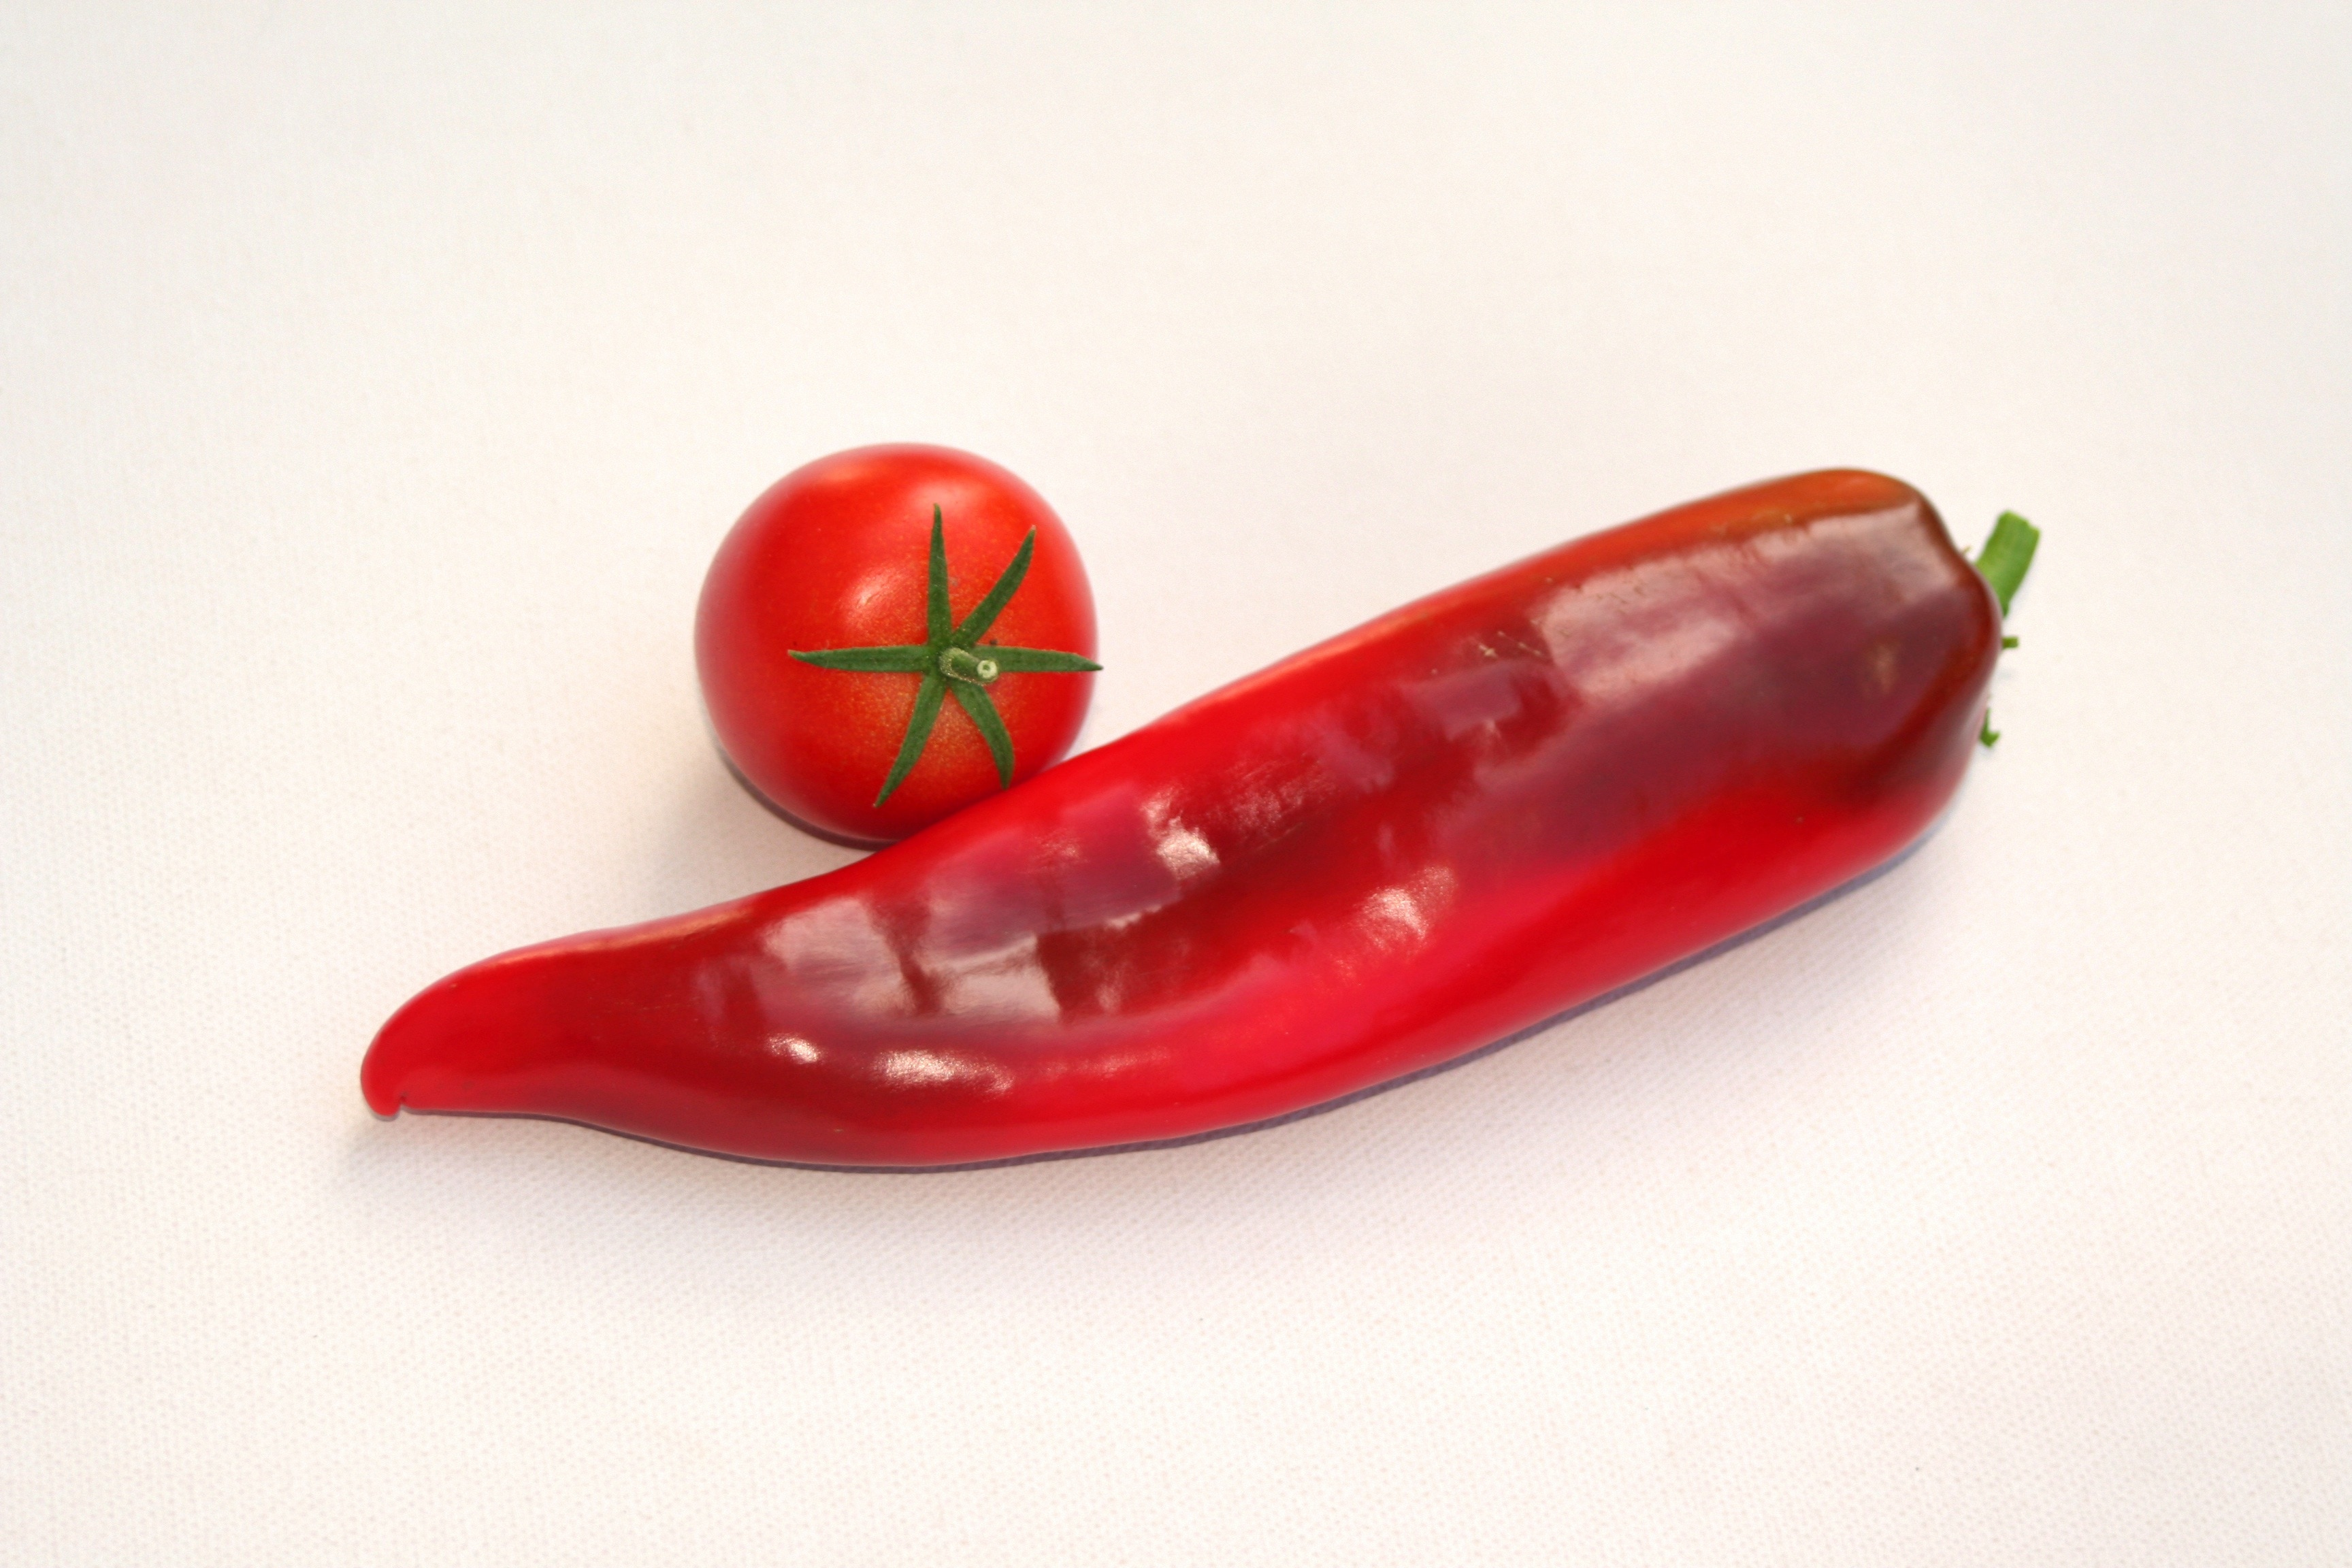 red tomato and chili